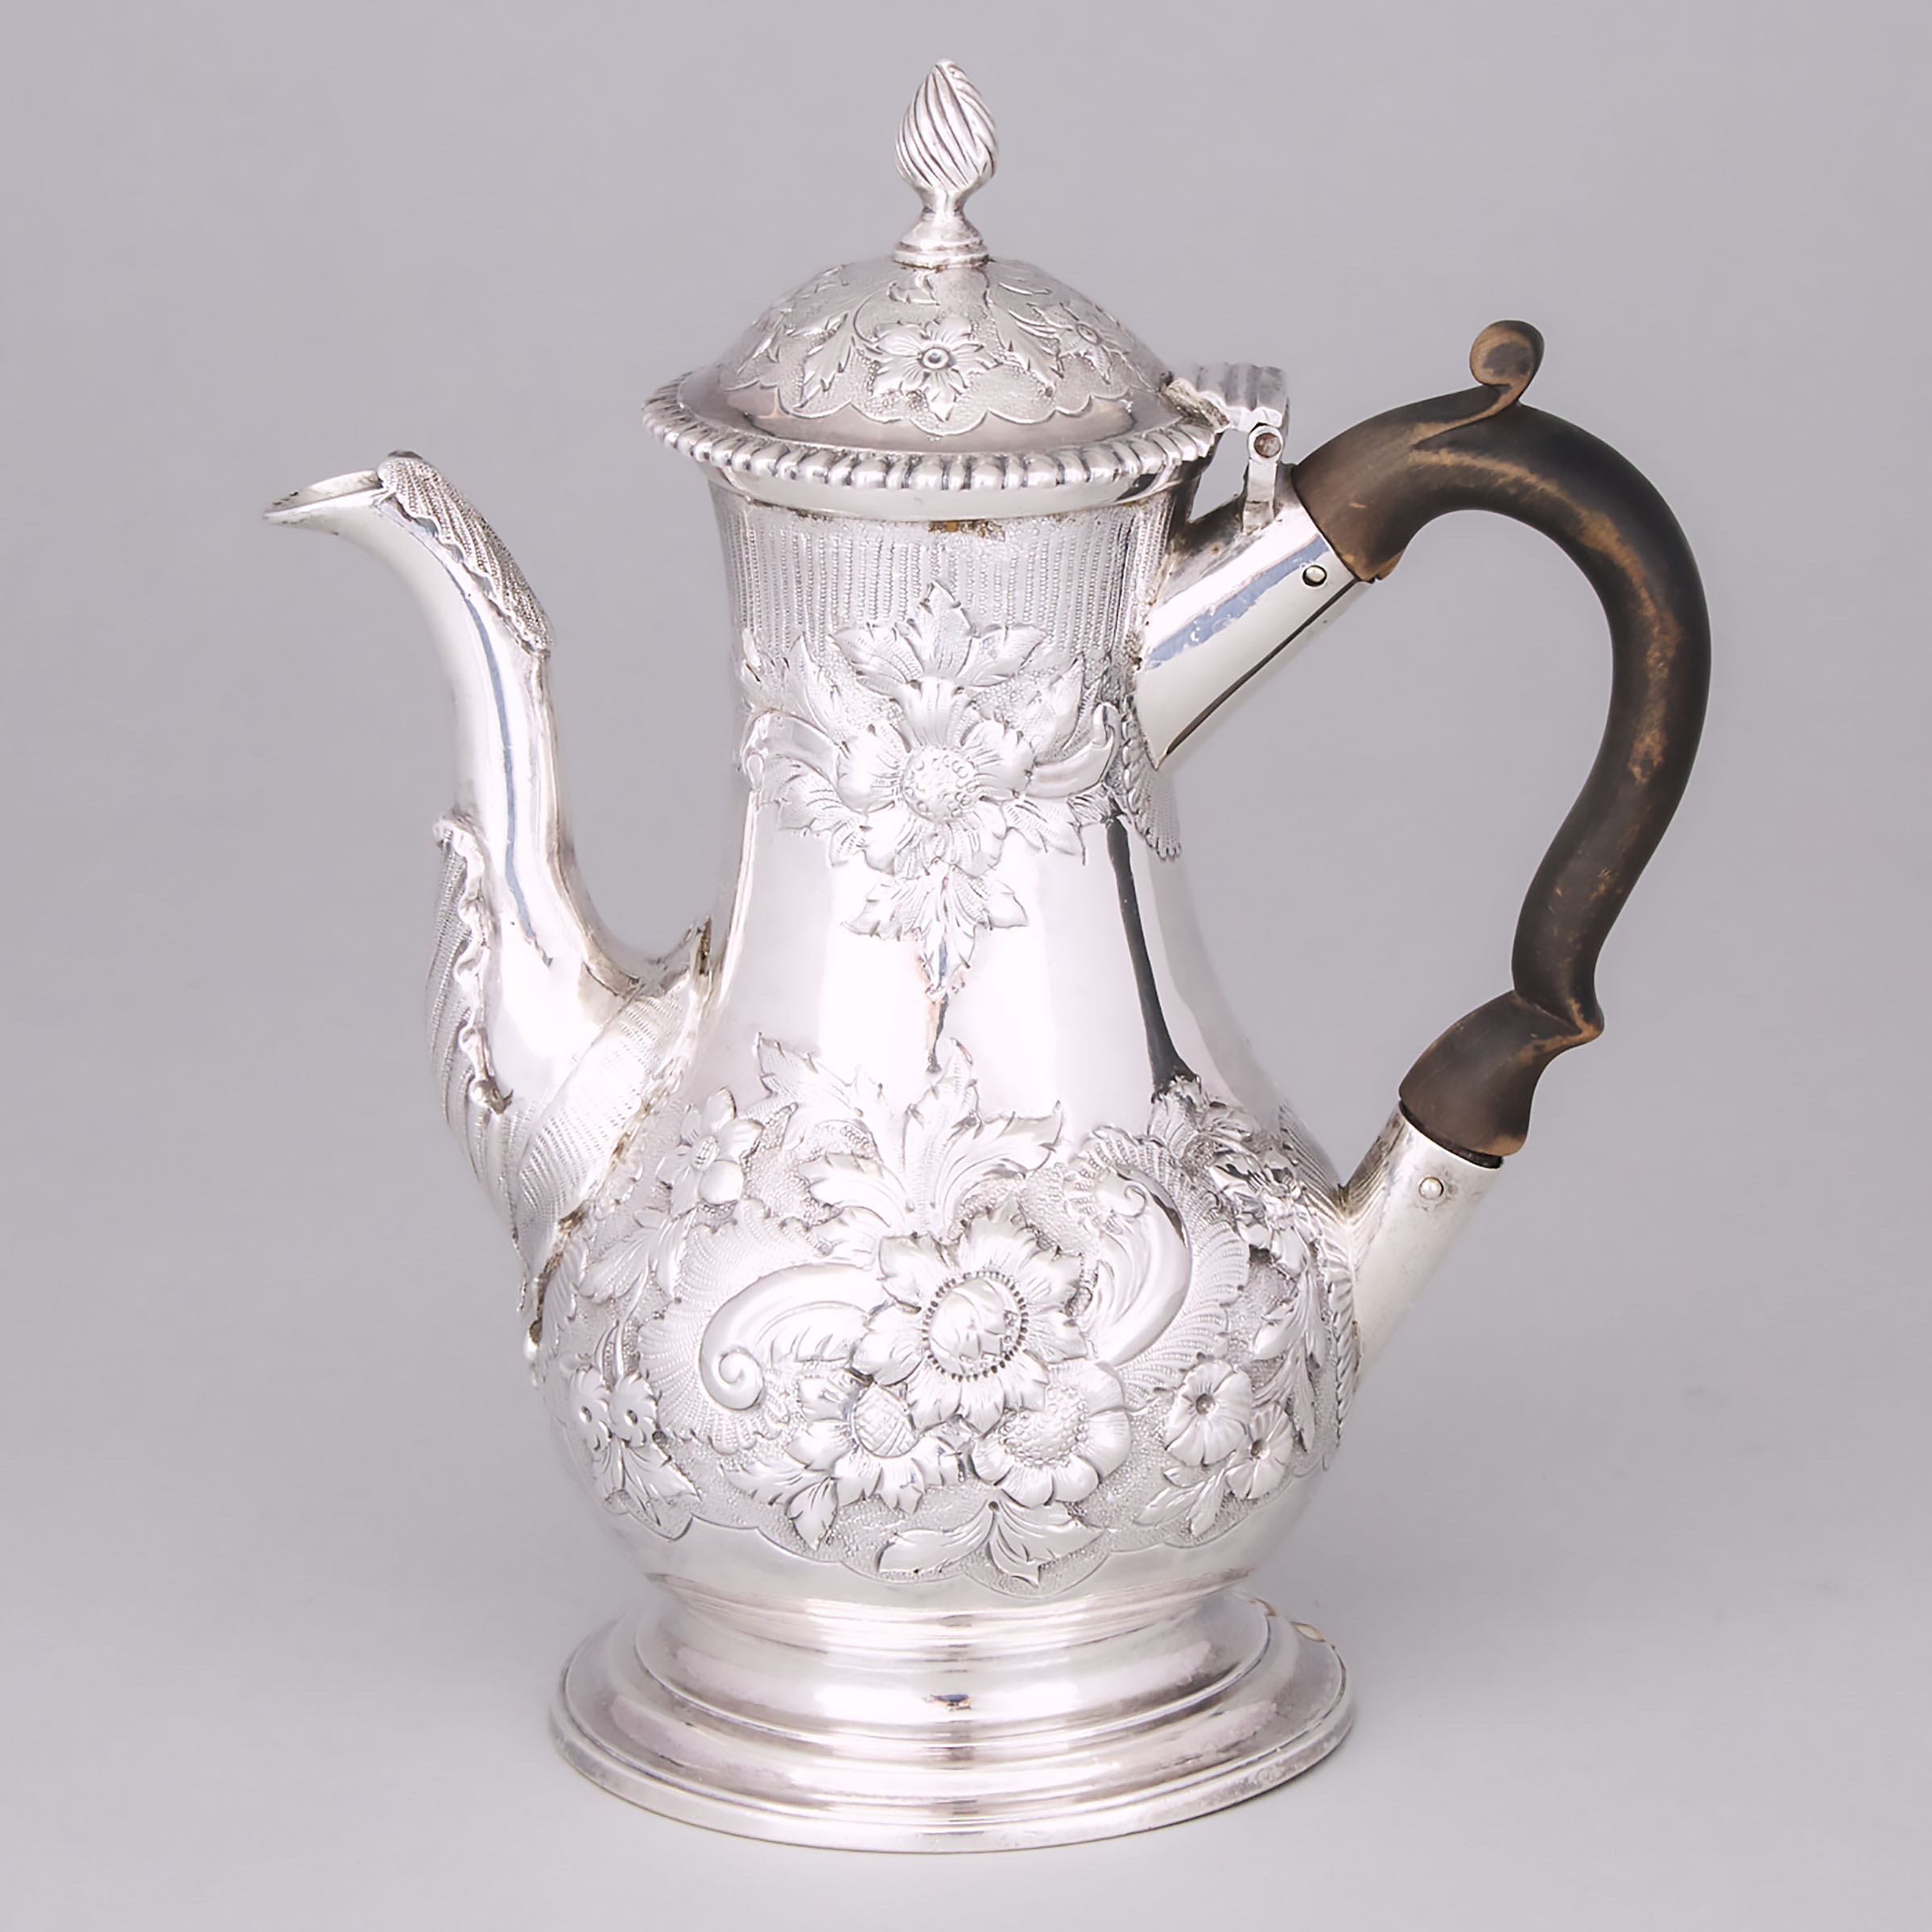 George III Silver Small Coffee Pot, John Scofield (probably), London, 1773